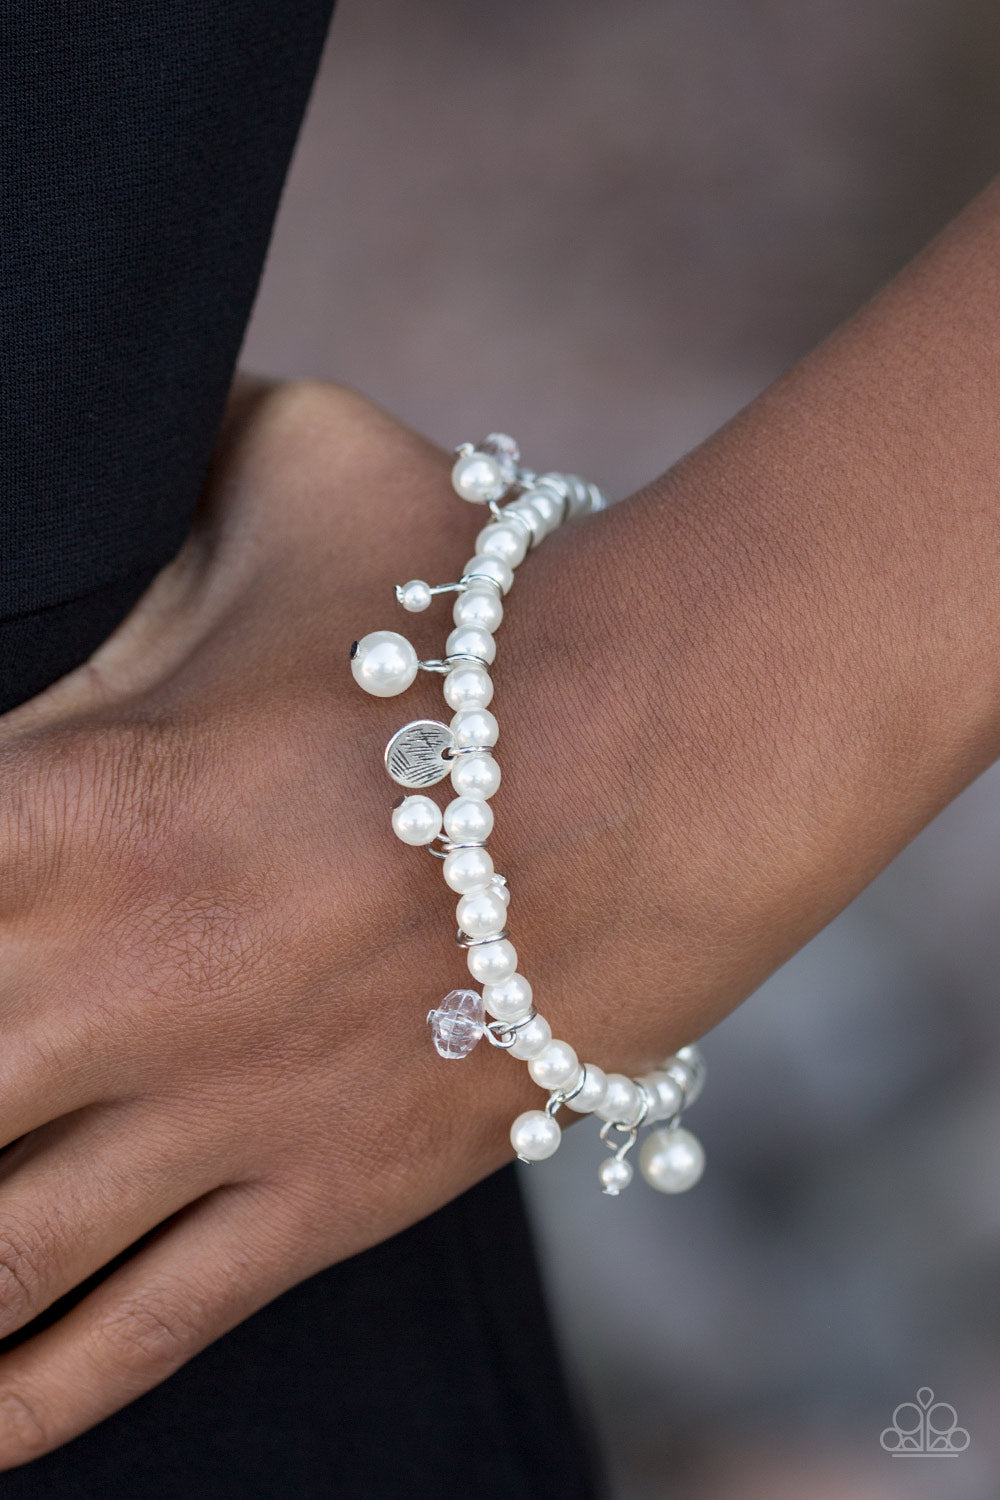 Treasure Chest Chic- White and Silver Bracelet- Paparazzi Accessories